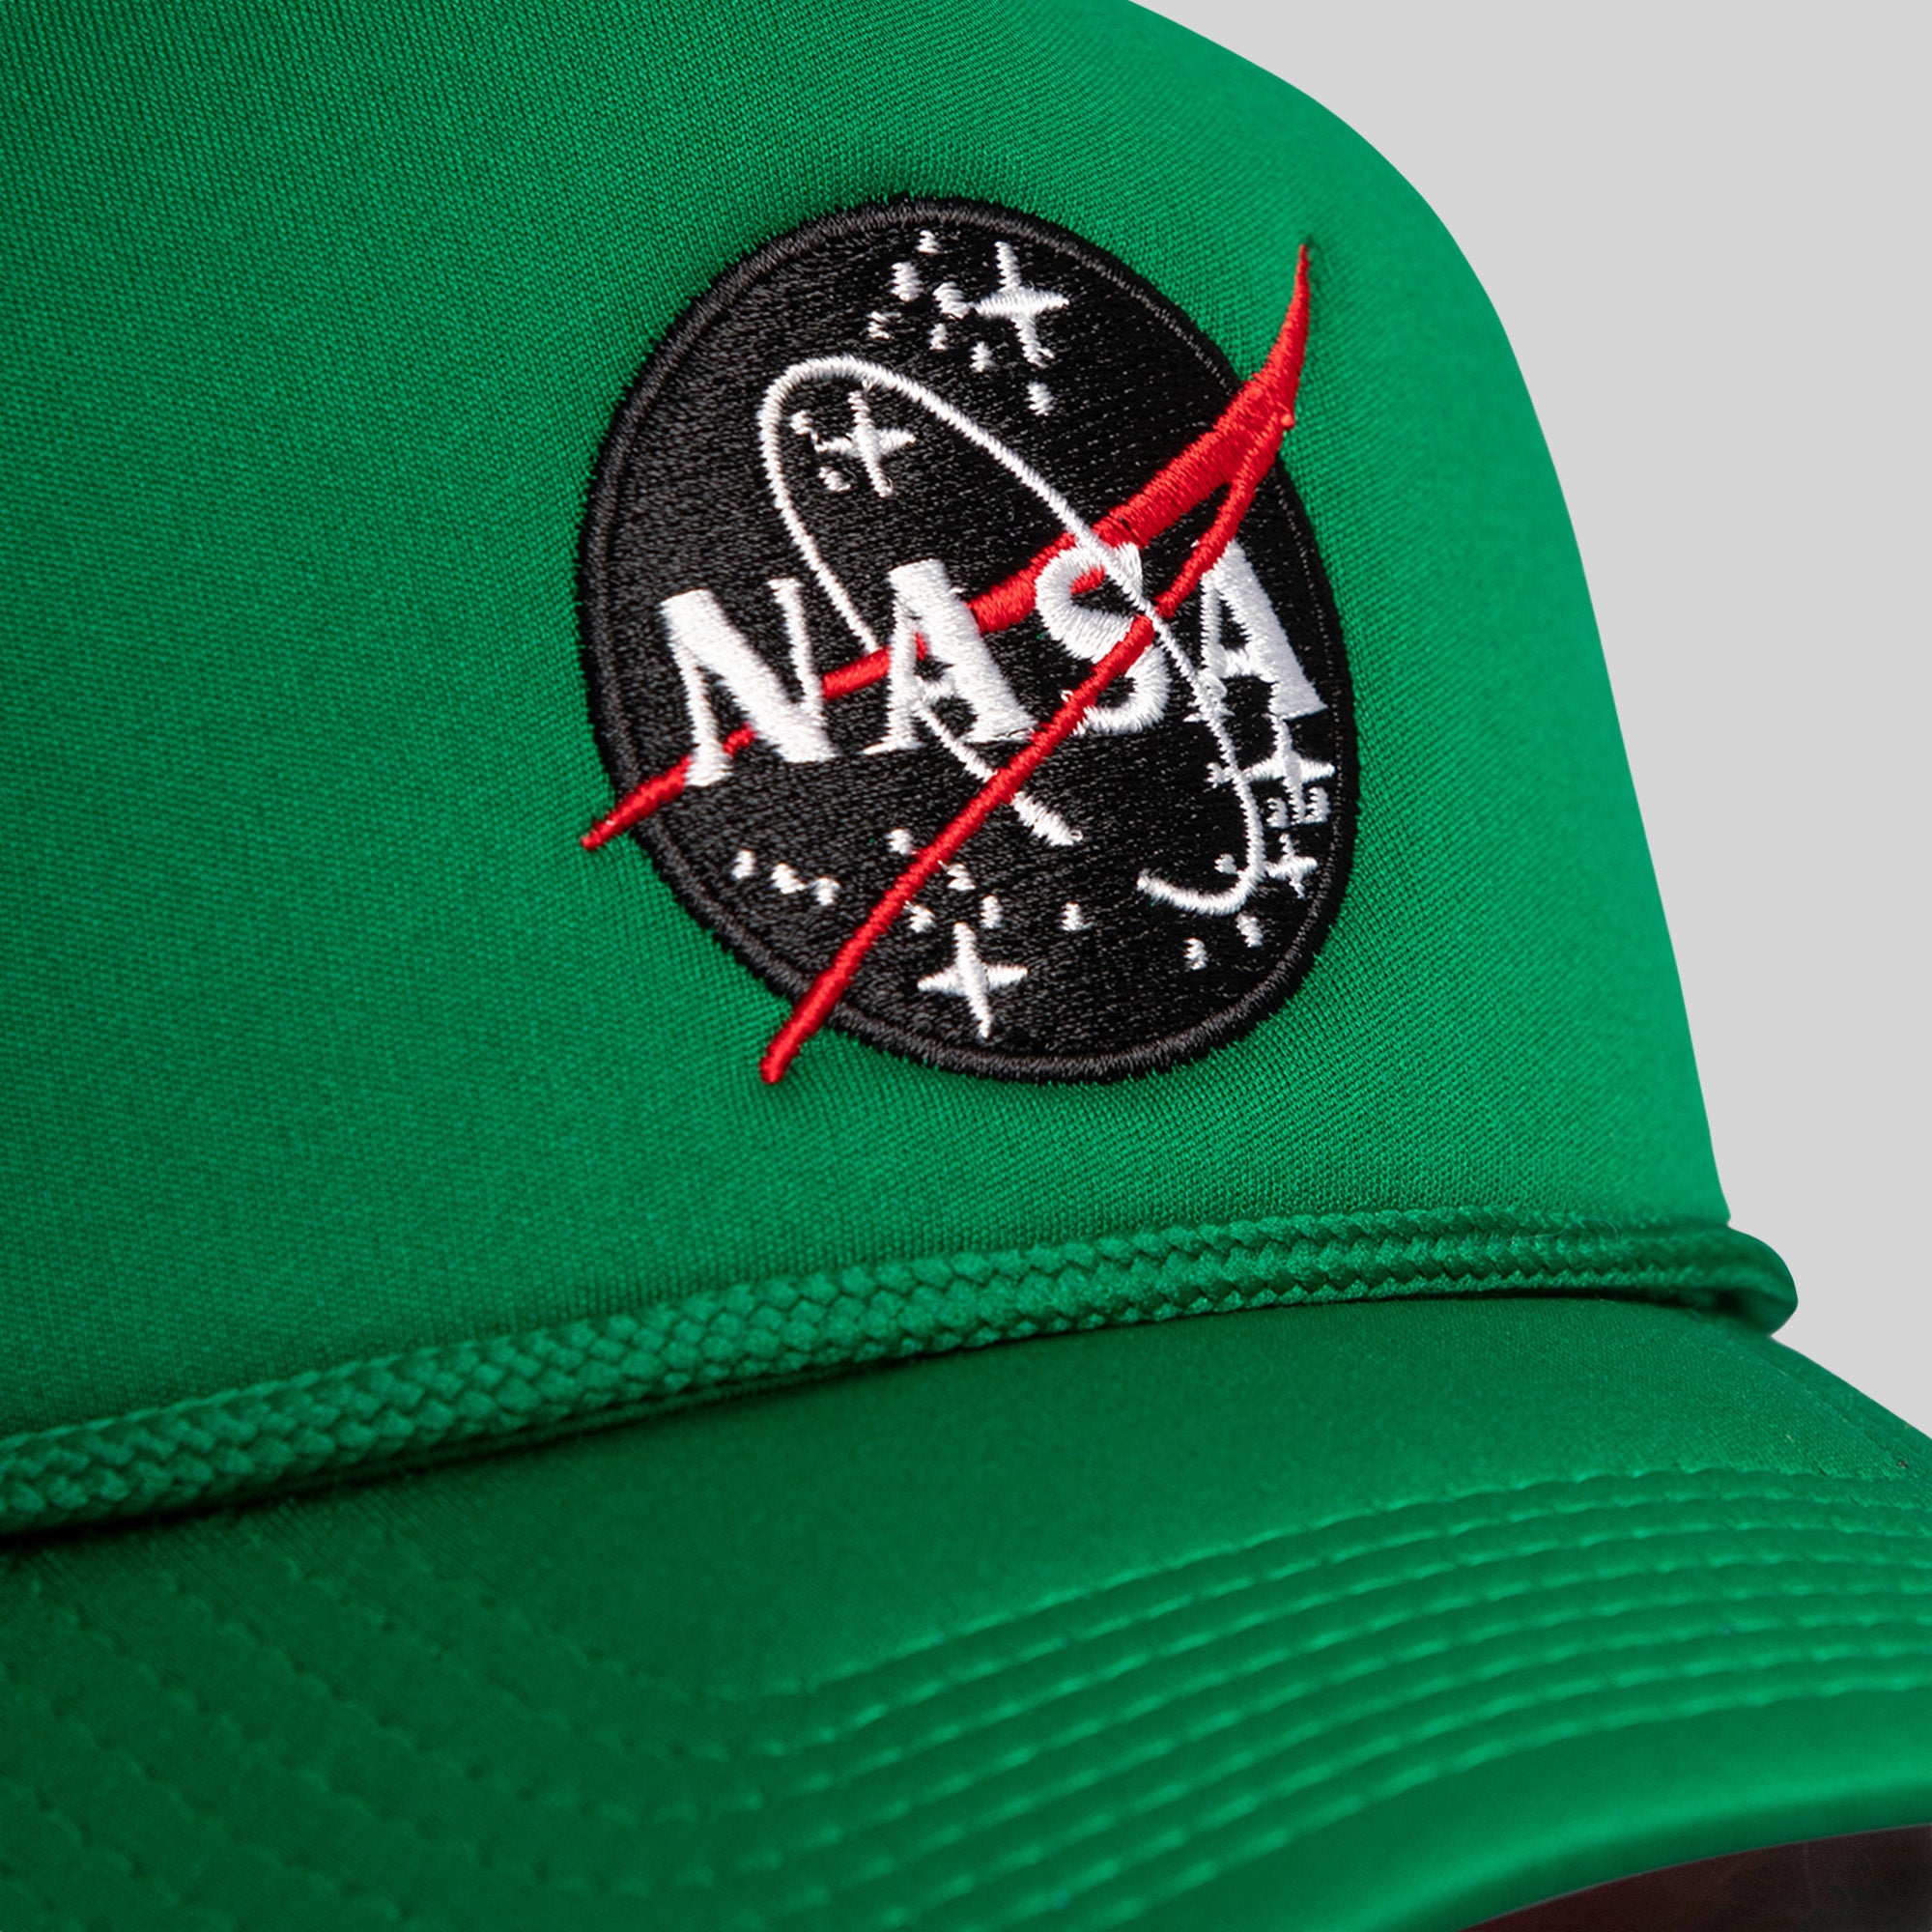 SKYLAB NASA 50TH ANNIVERSARY GREEN TRUCKER HAT